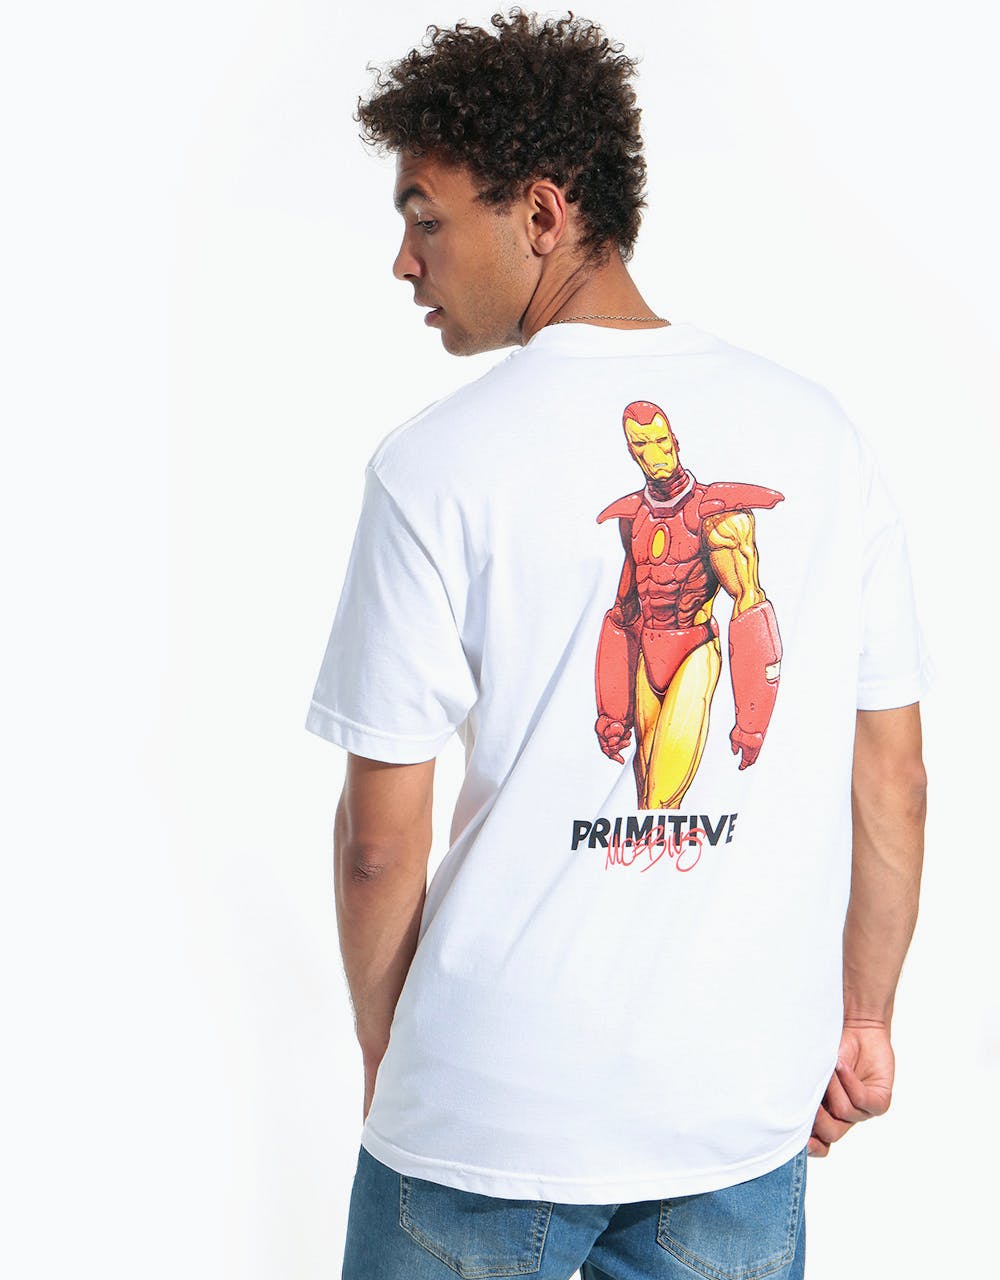 Primitive x Moebius Iron Man T-Shirt - White